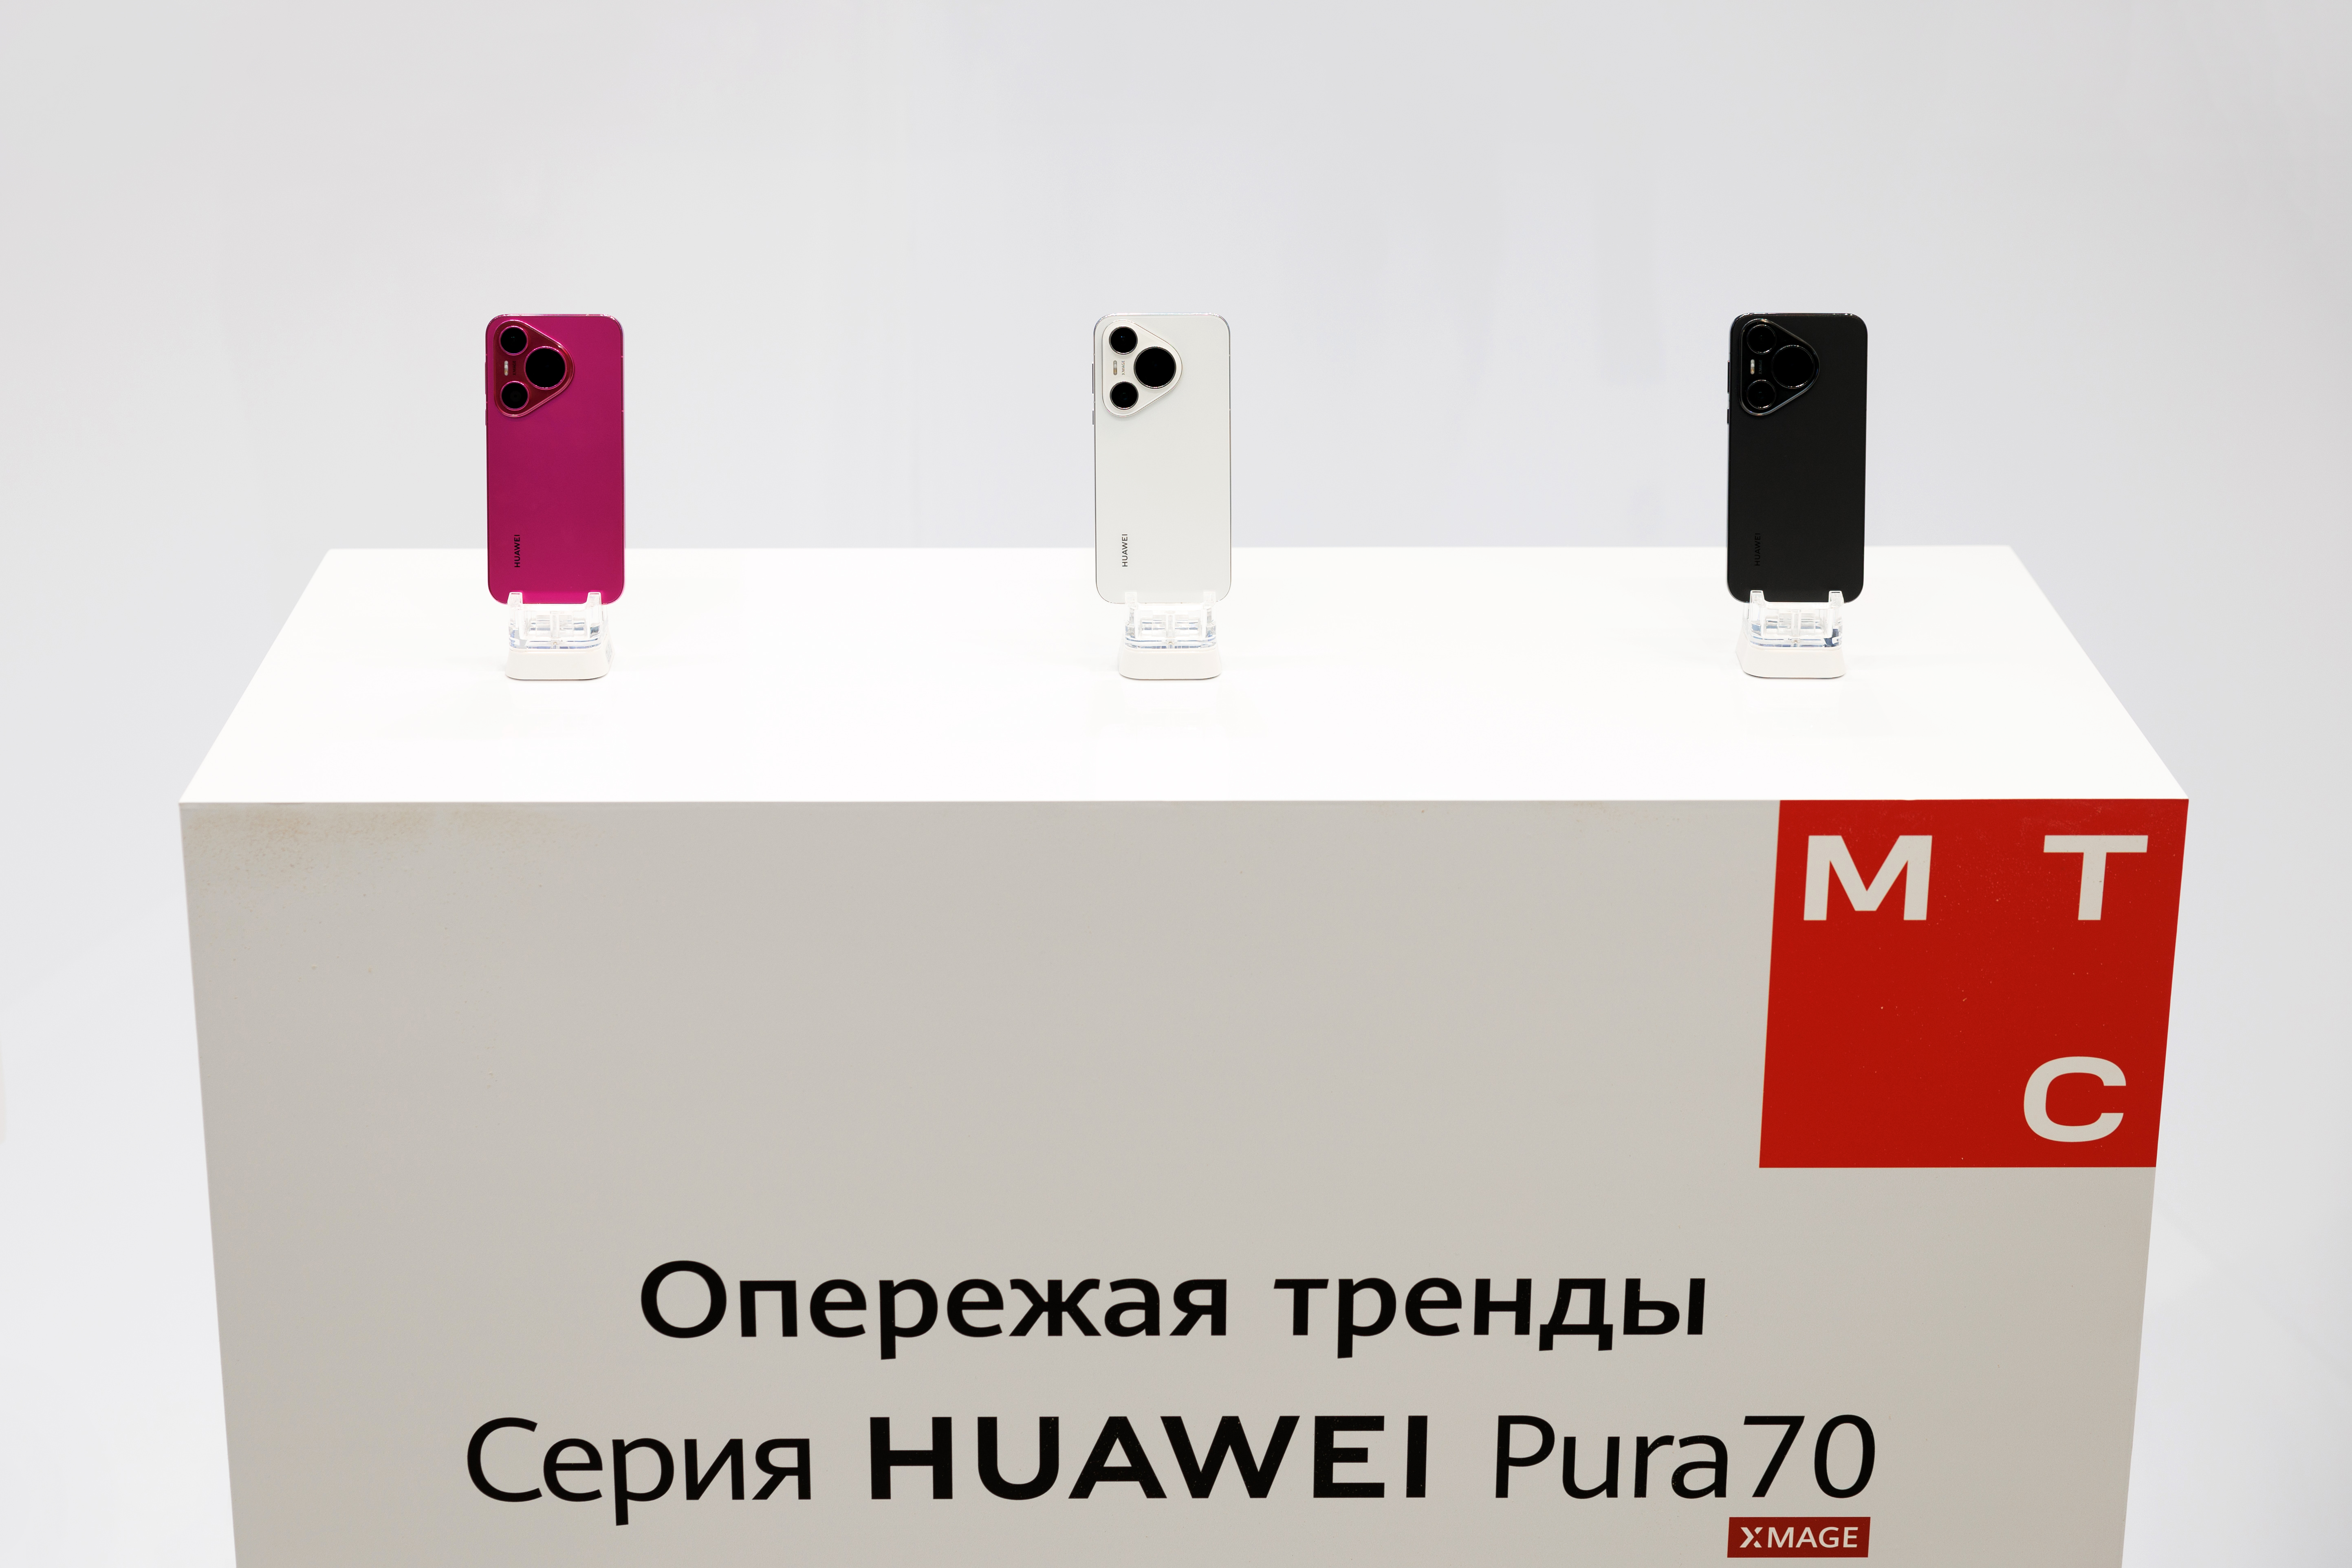         Huawei Pura 70